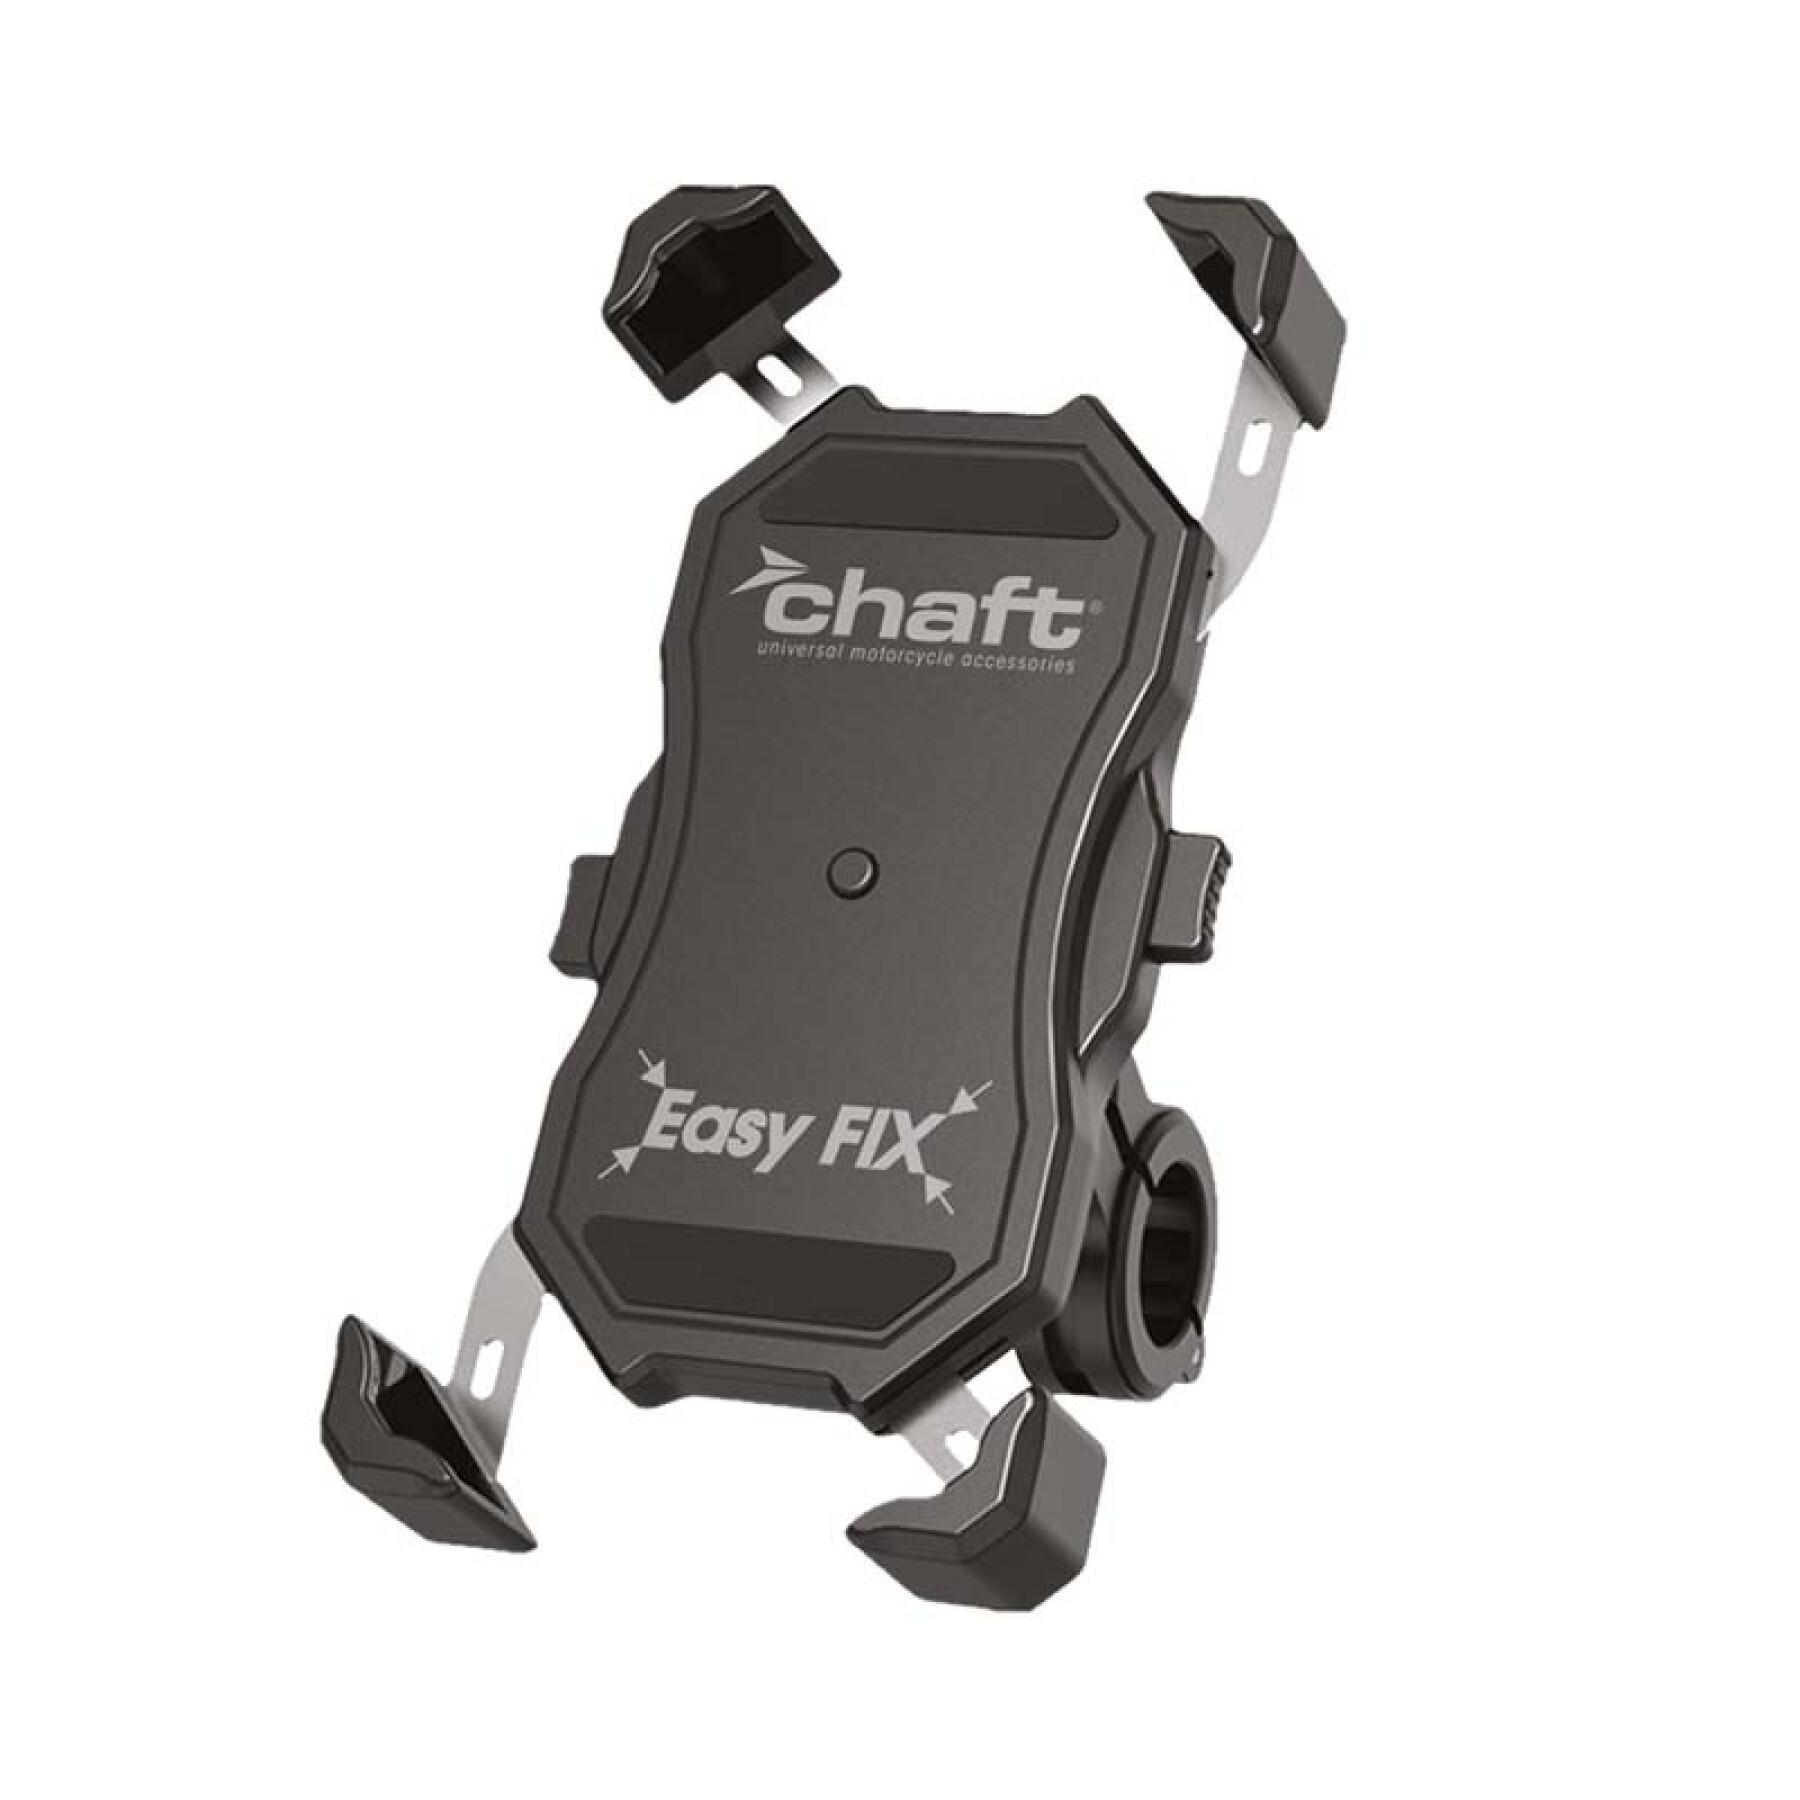 Support smartphone moto Chaft Easyfix